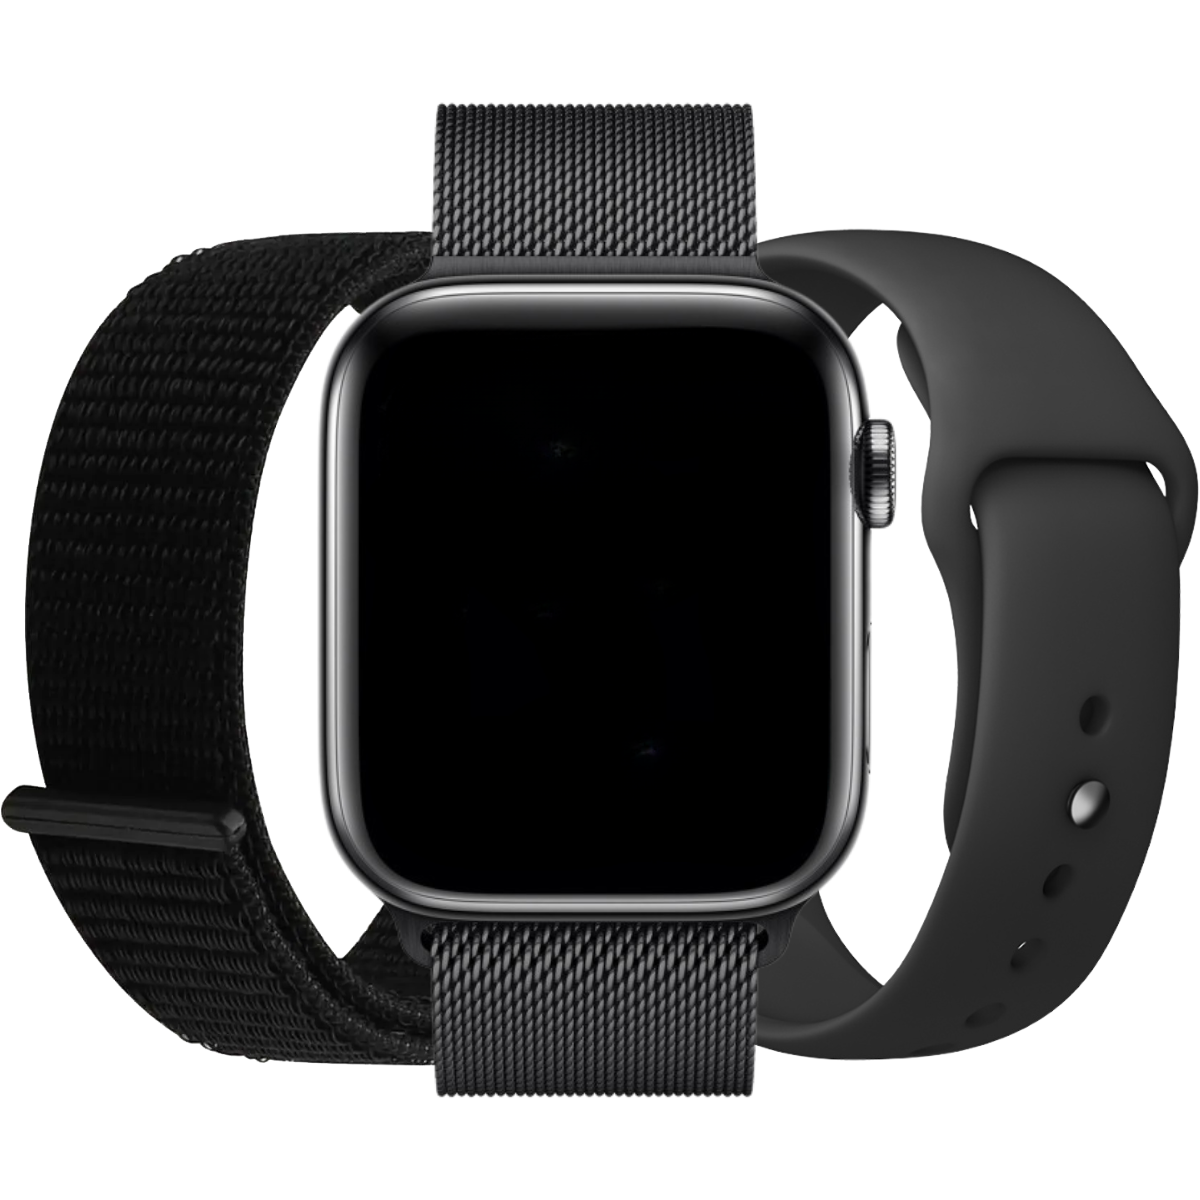 Black Apple Watch bundle deal - 3x